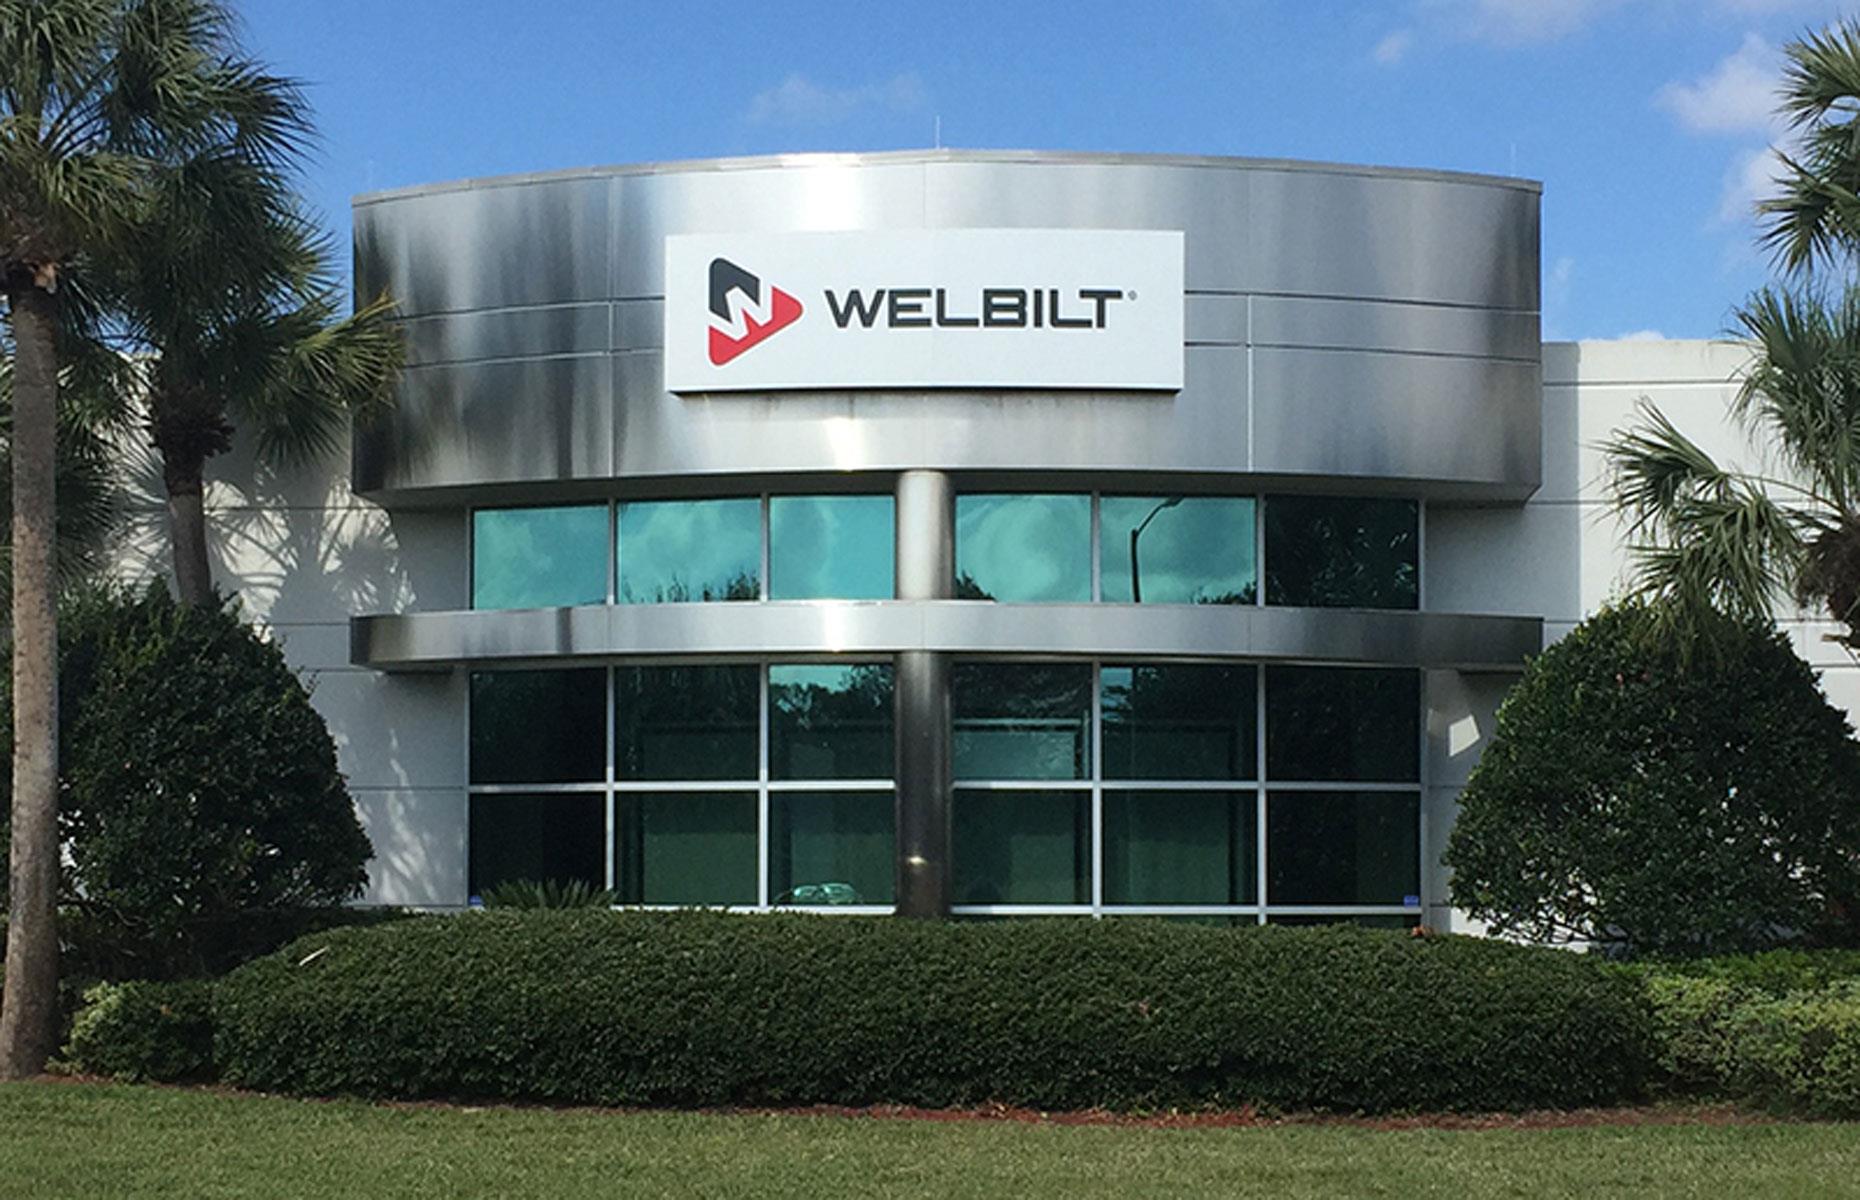 Welbilt (NYSE: WBT)